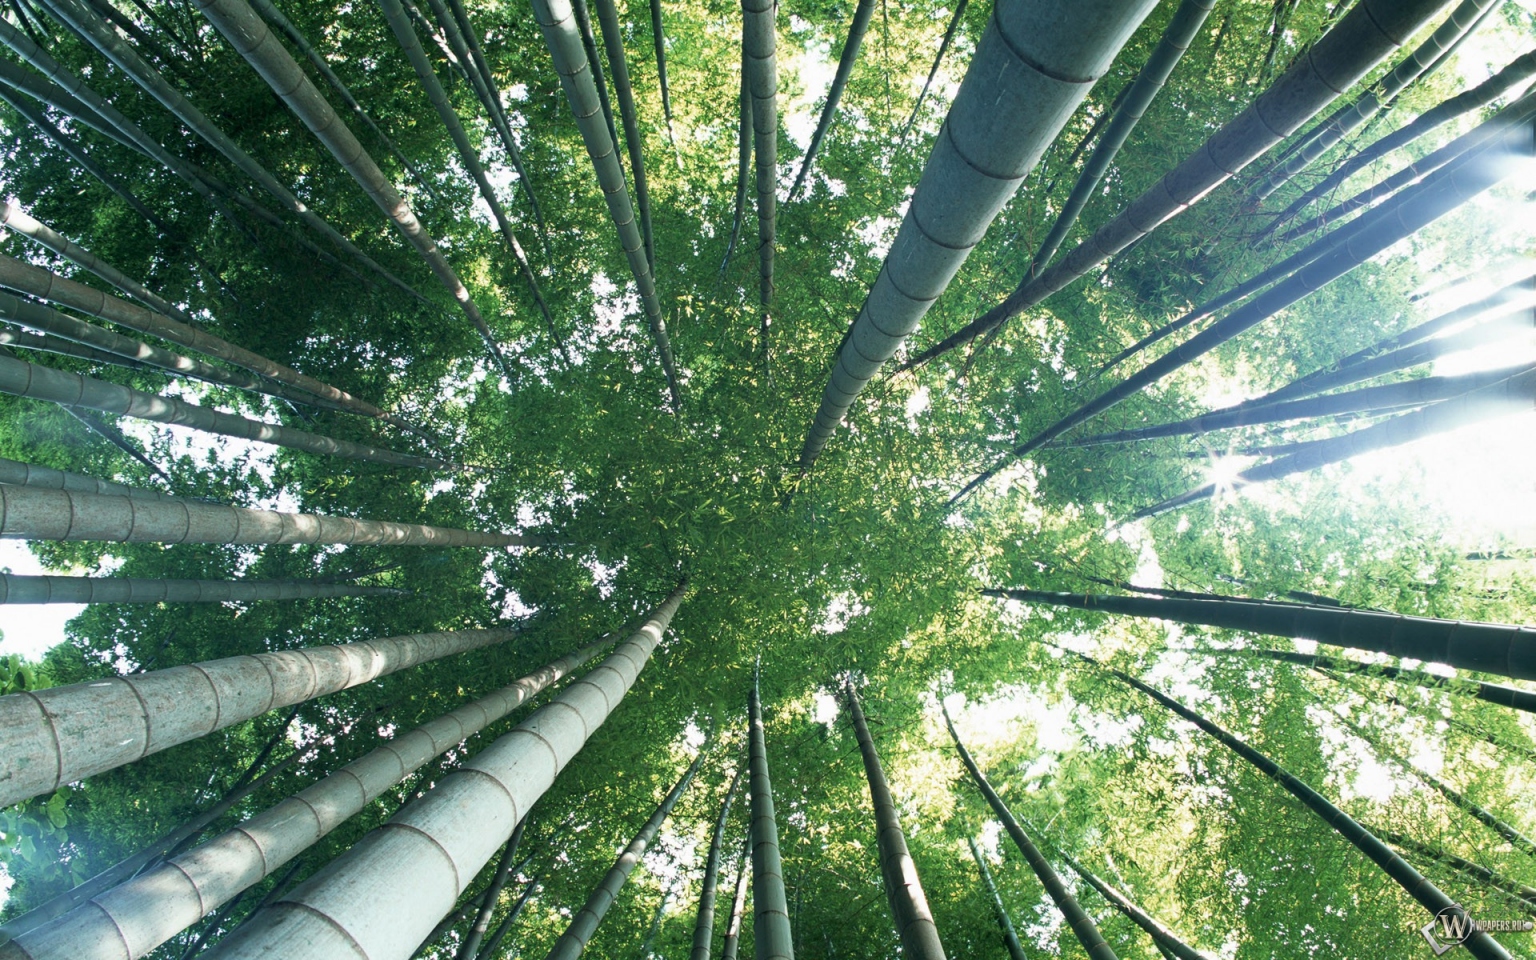 Бамбуковый лес 1536x960